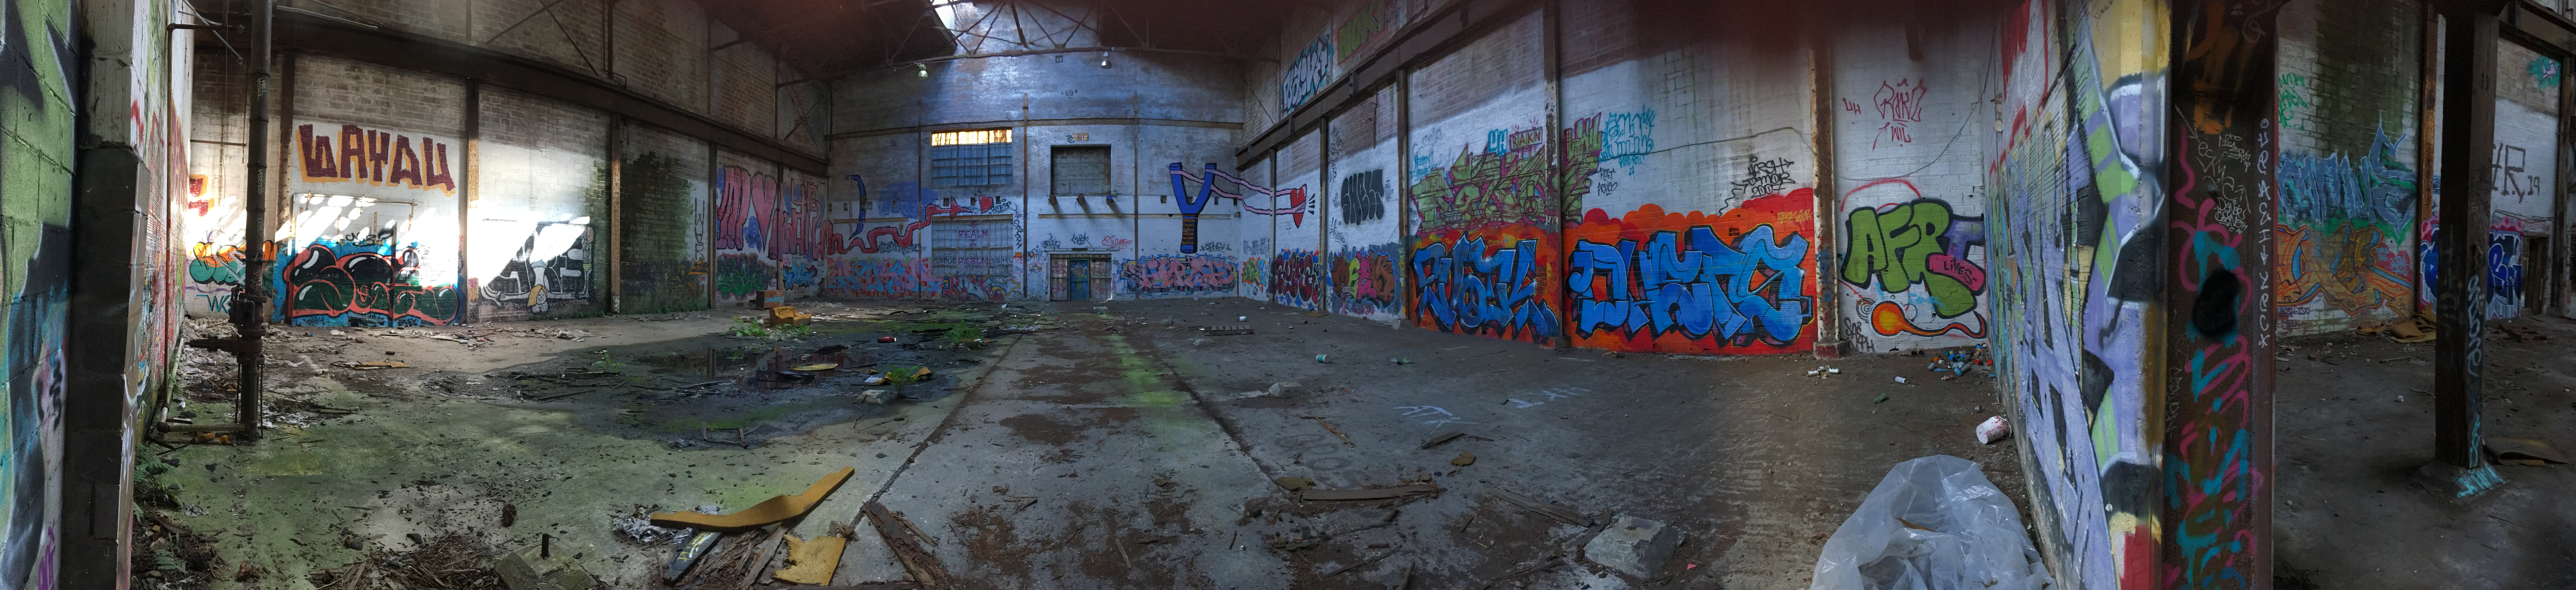 panorama of graffiti in warehouse